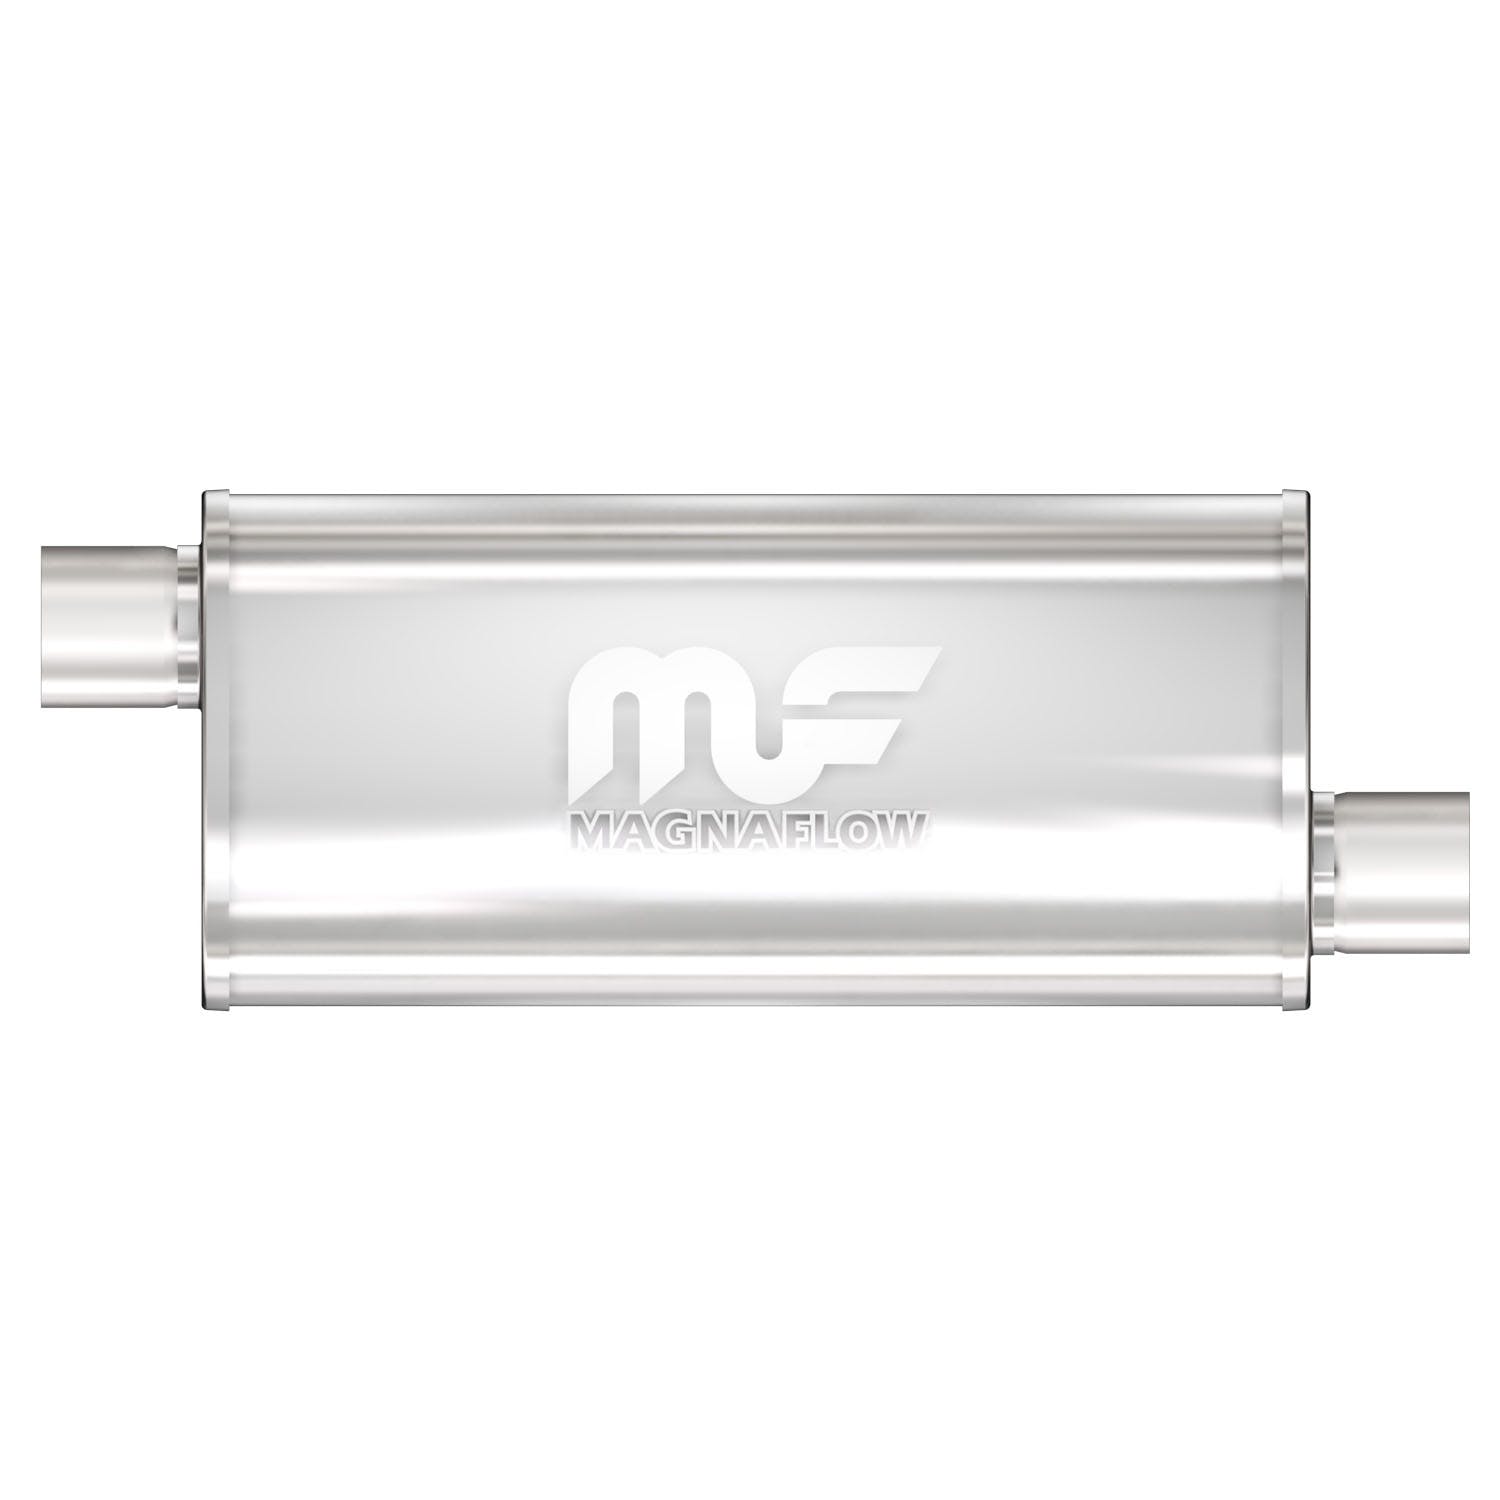 MagnaFlow Exhaust Products 14262 Universal Muffler